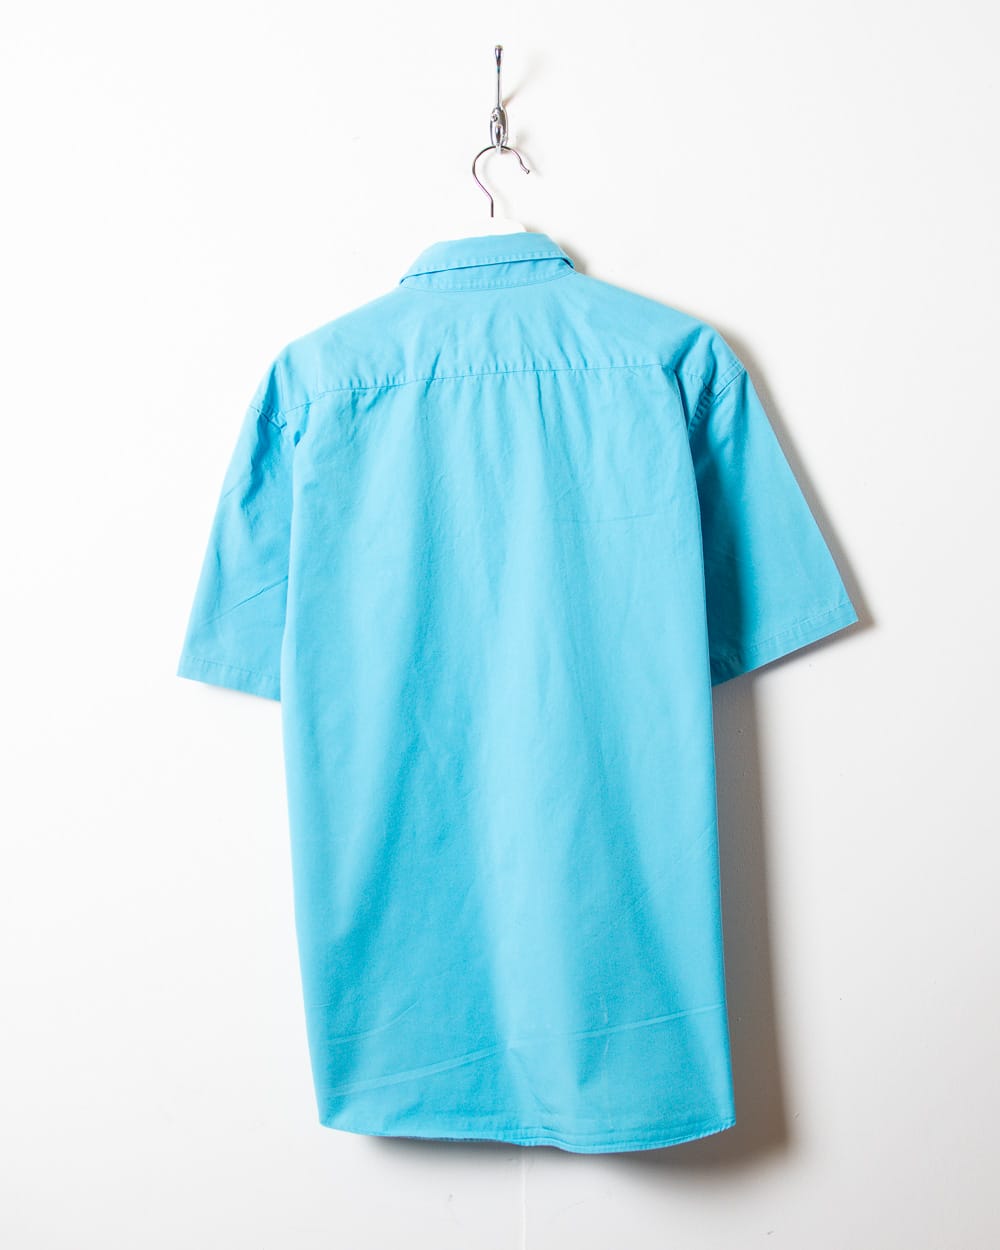 BabyBlue Yves Saint Laurent Short Sleeved Shirt - X-Large